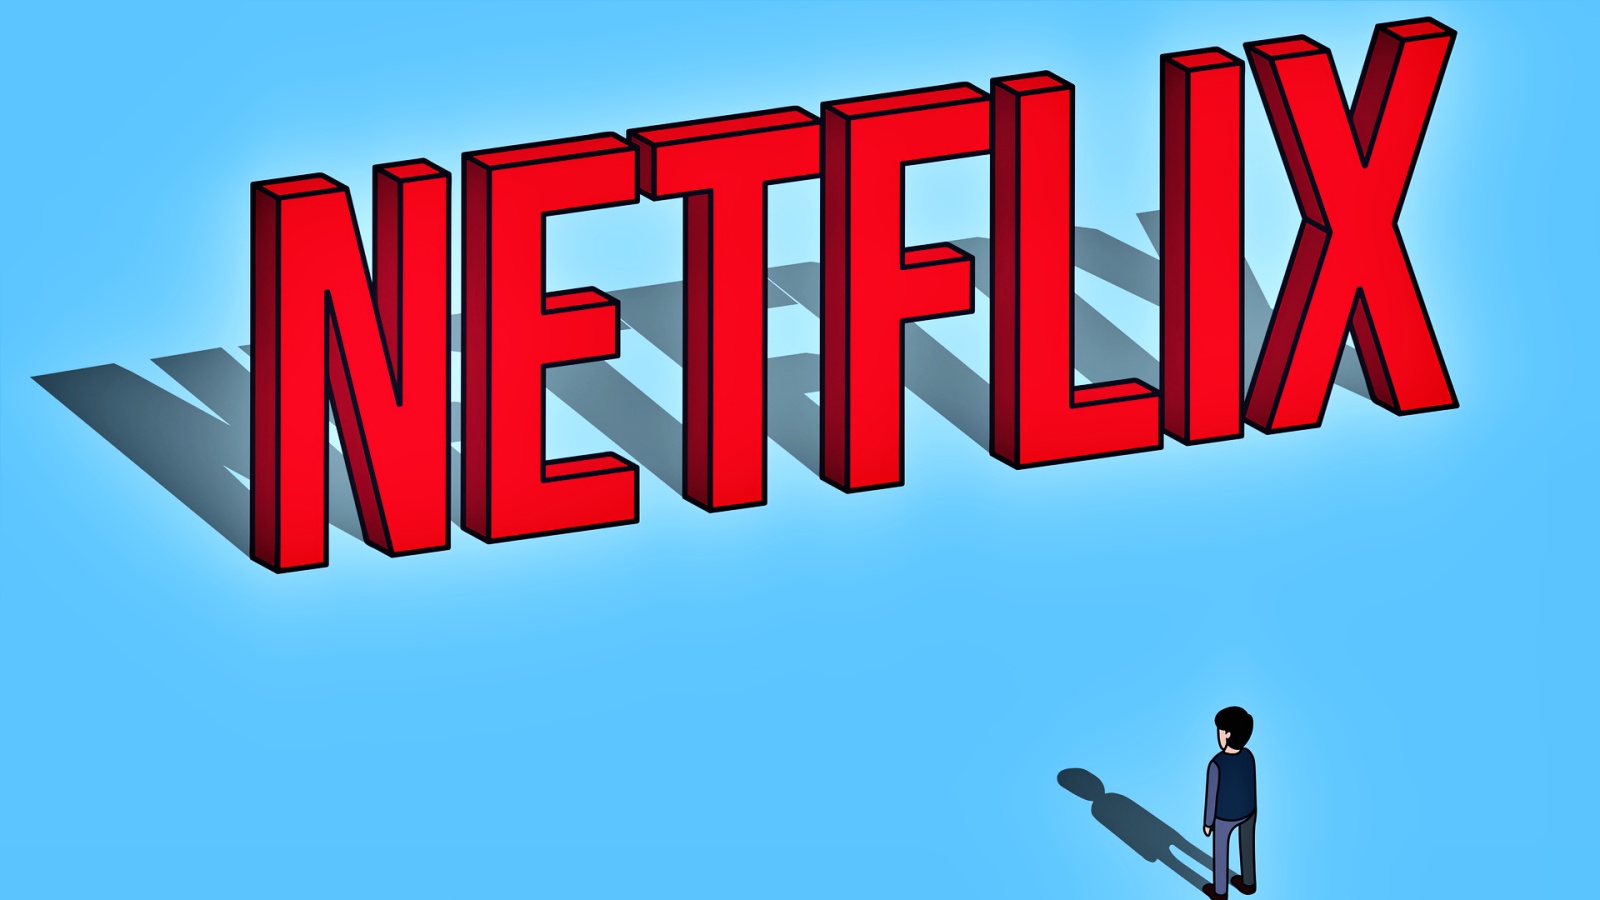 Netflix Anuntul OFICIAL Surprins Abonatii Nivel Mondial